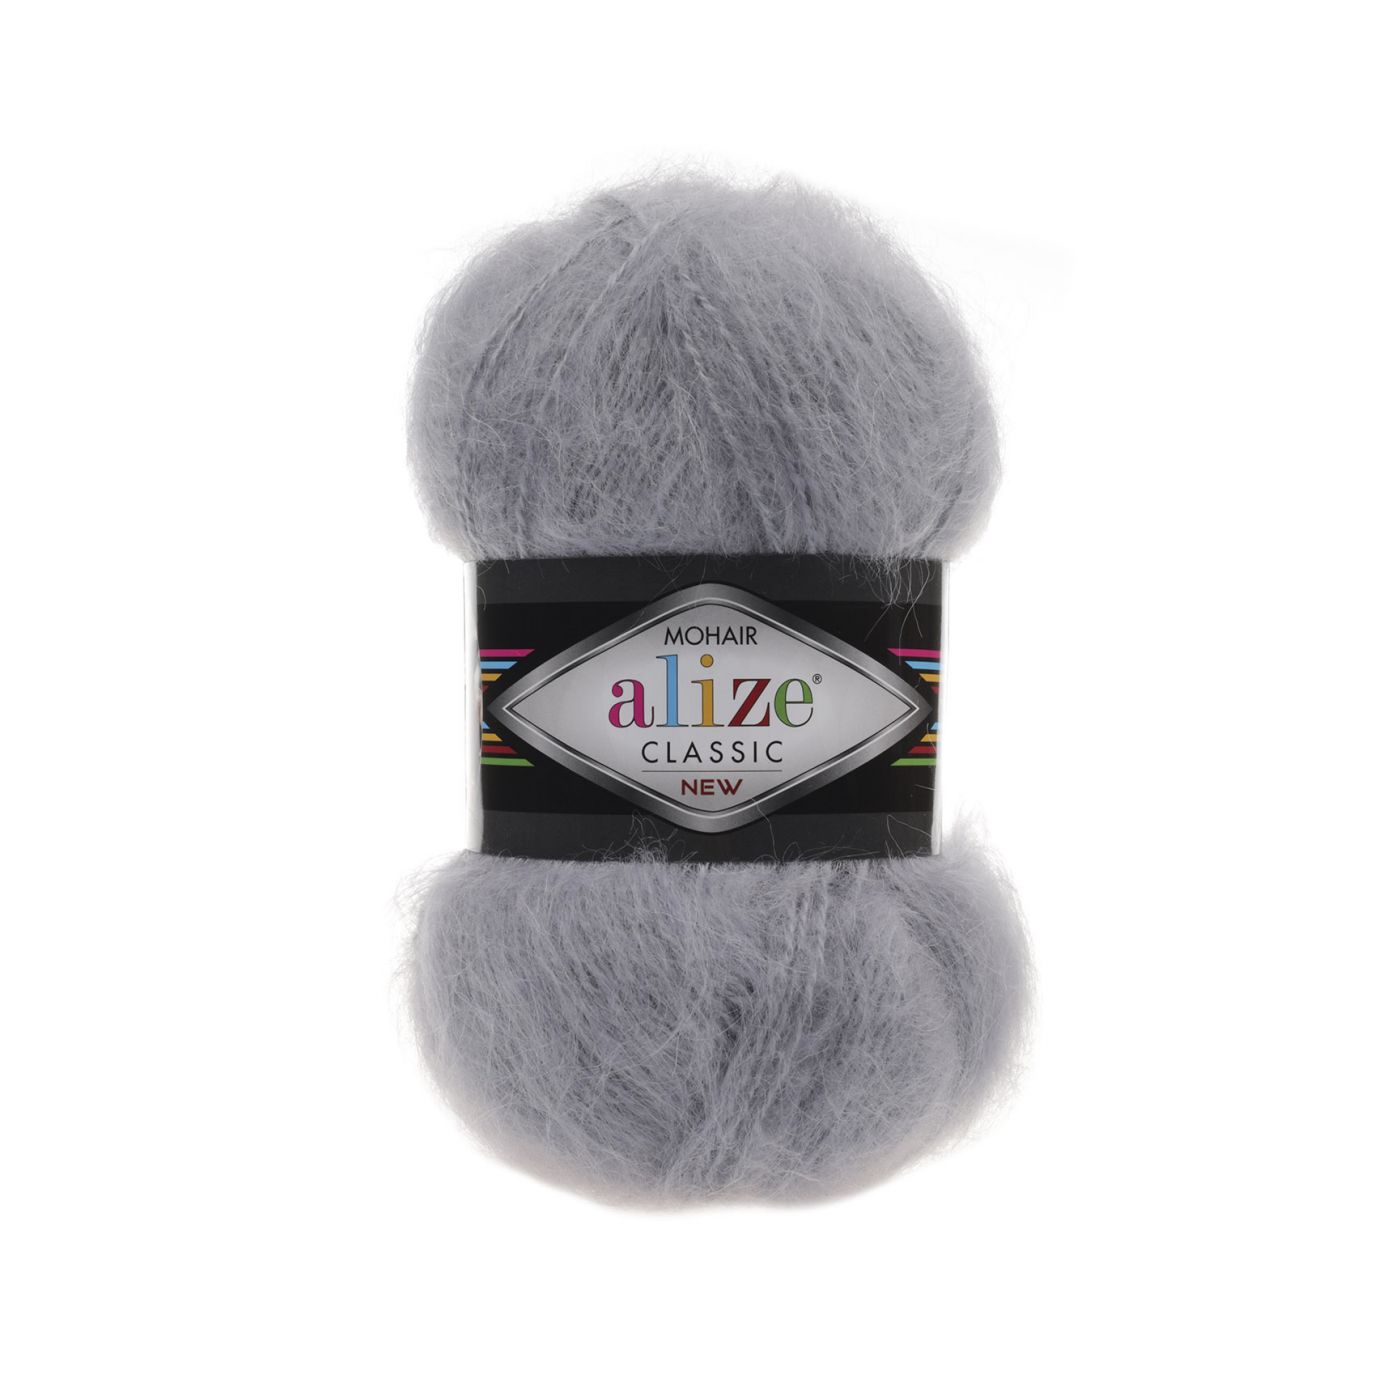 Alize Mohair classic new 21 серый